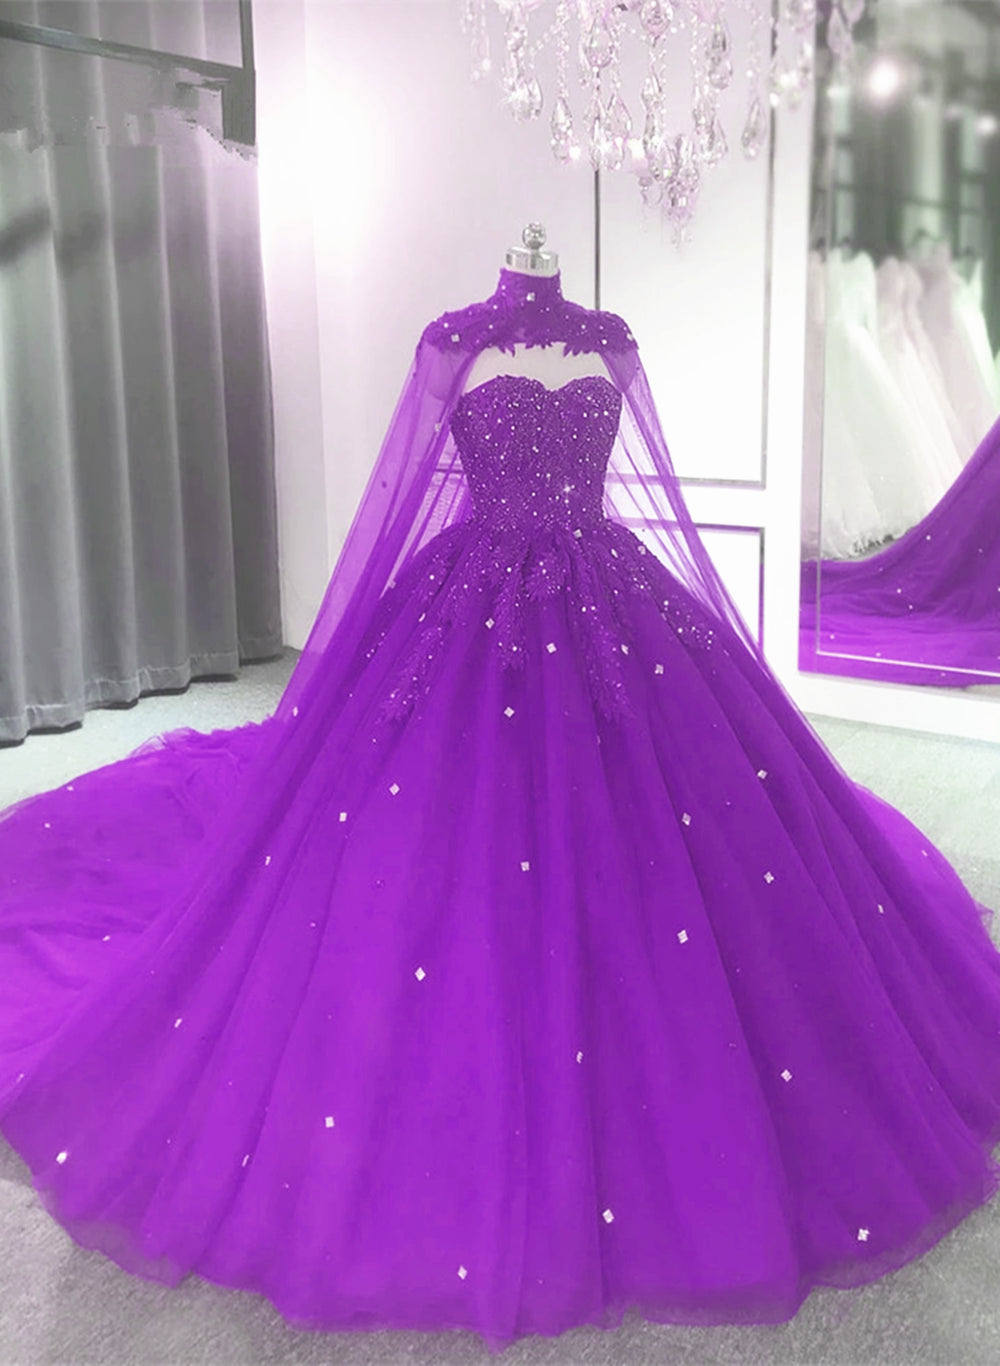 Bridesmaid Dresses Pink, Purple Tulle Quinceanera Dress Lace Applique Beaded Cape, Purple Formal Dress Party Dress